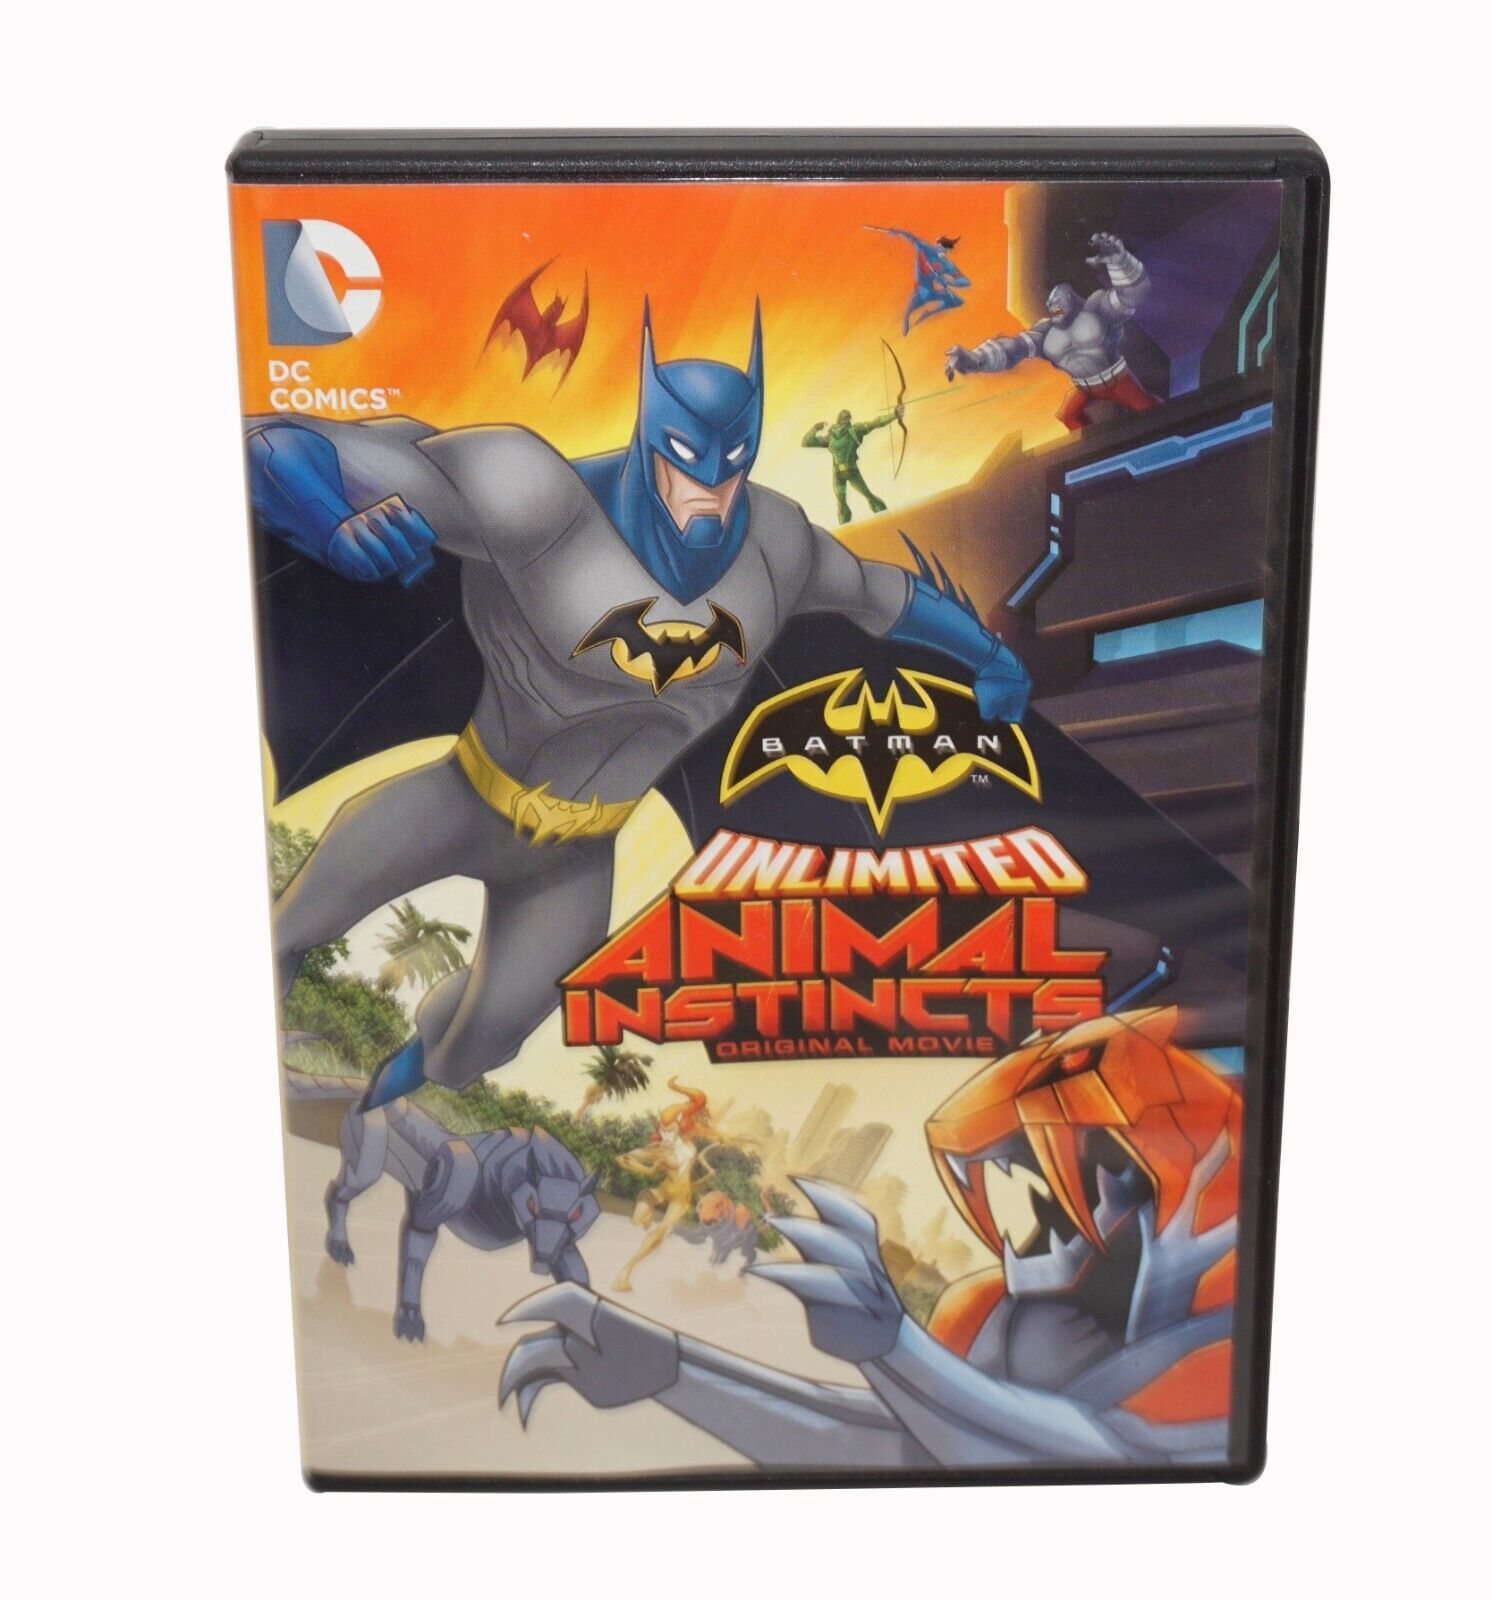 Primary image for DC Comics - Batman Unlimited Animal Instincts Original Animated Movie DVD